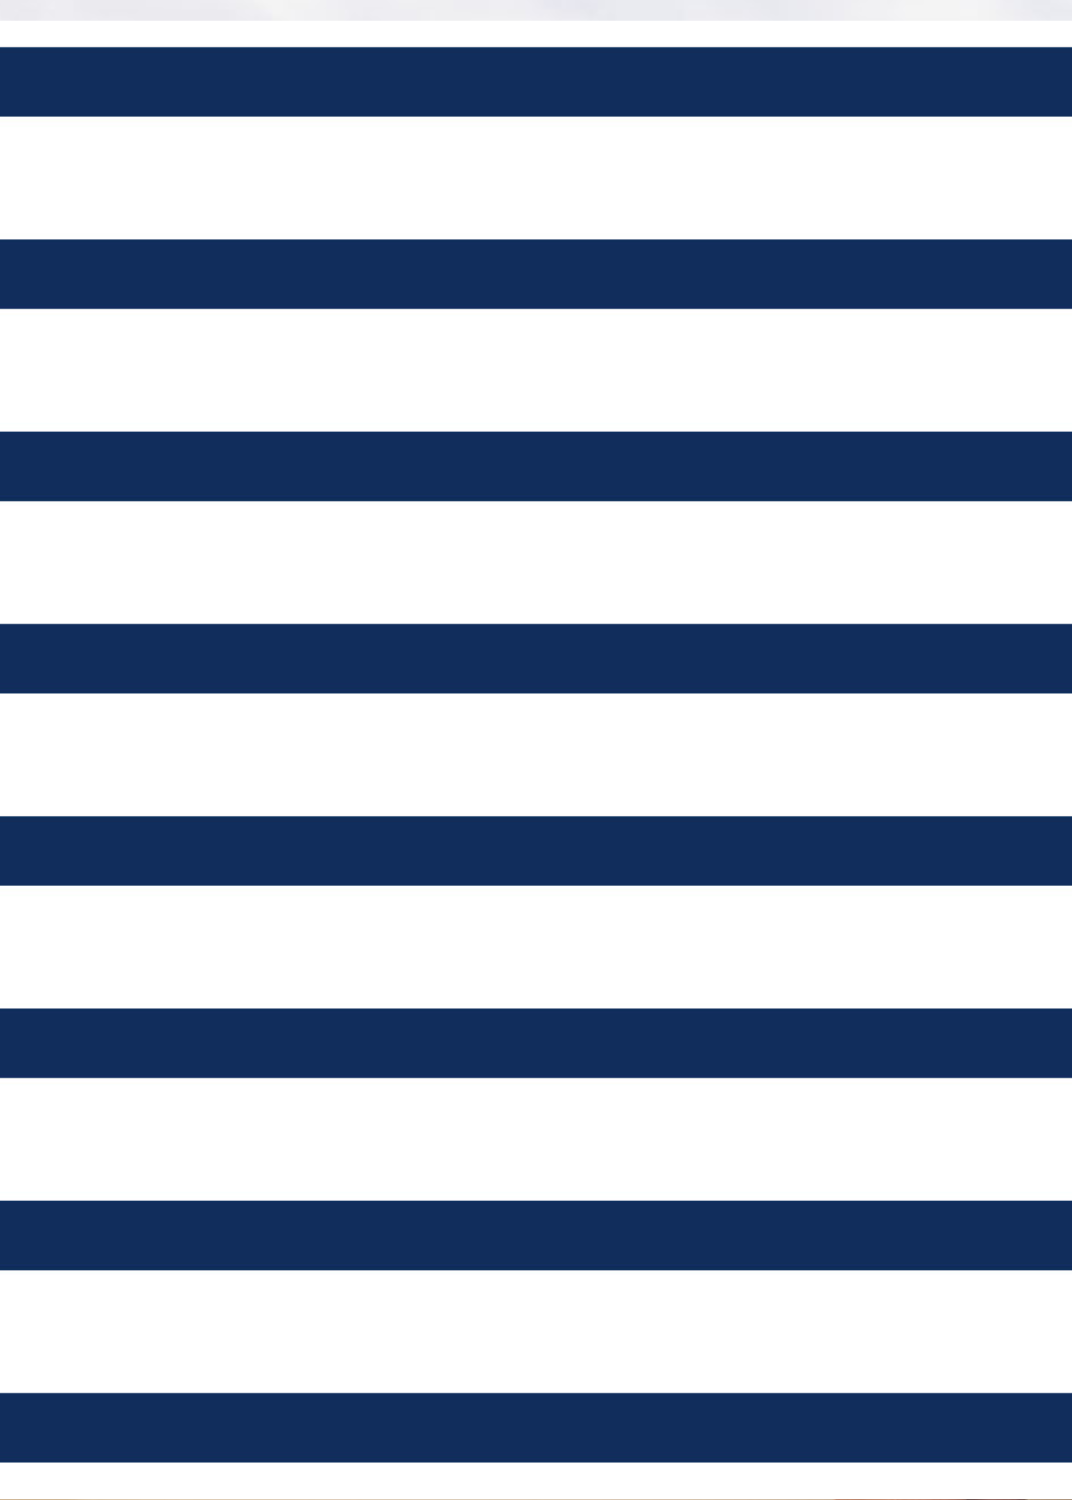 Bailey Dress - Cotton True Navy/White Breton Stripe